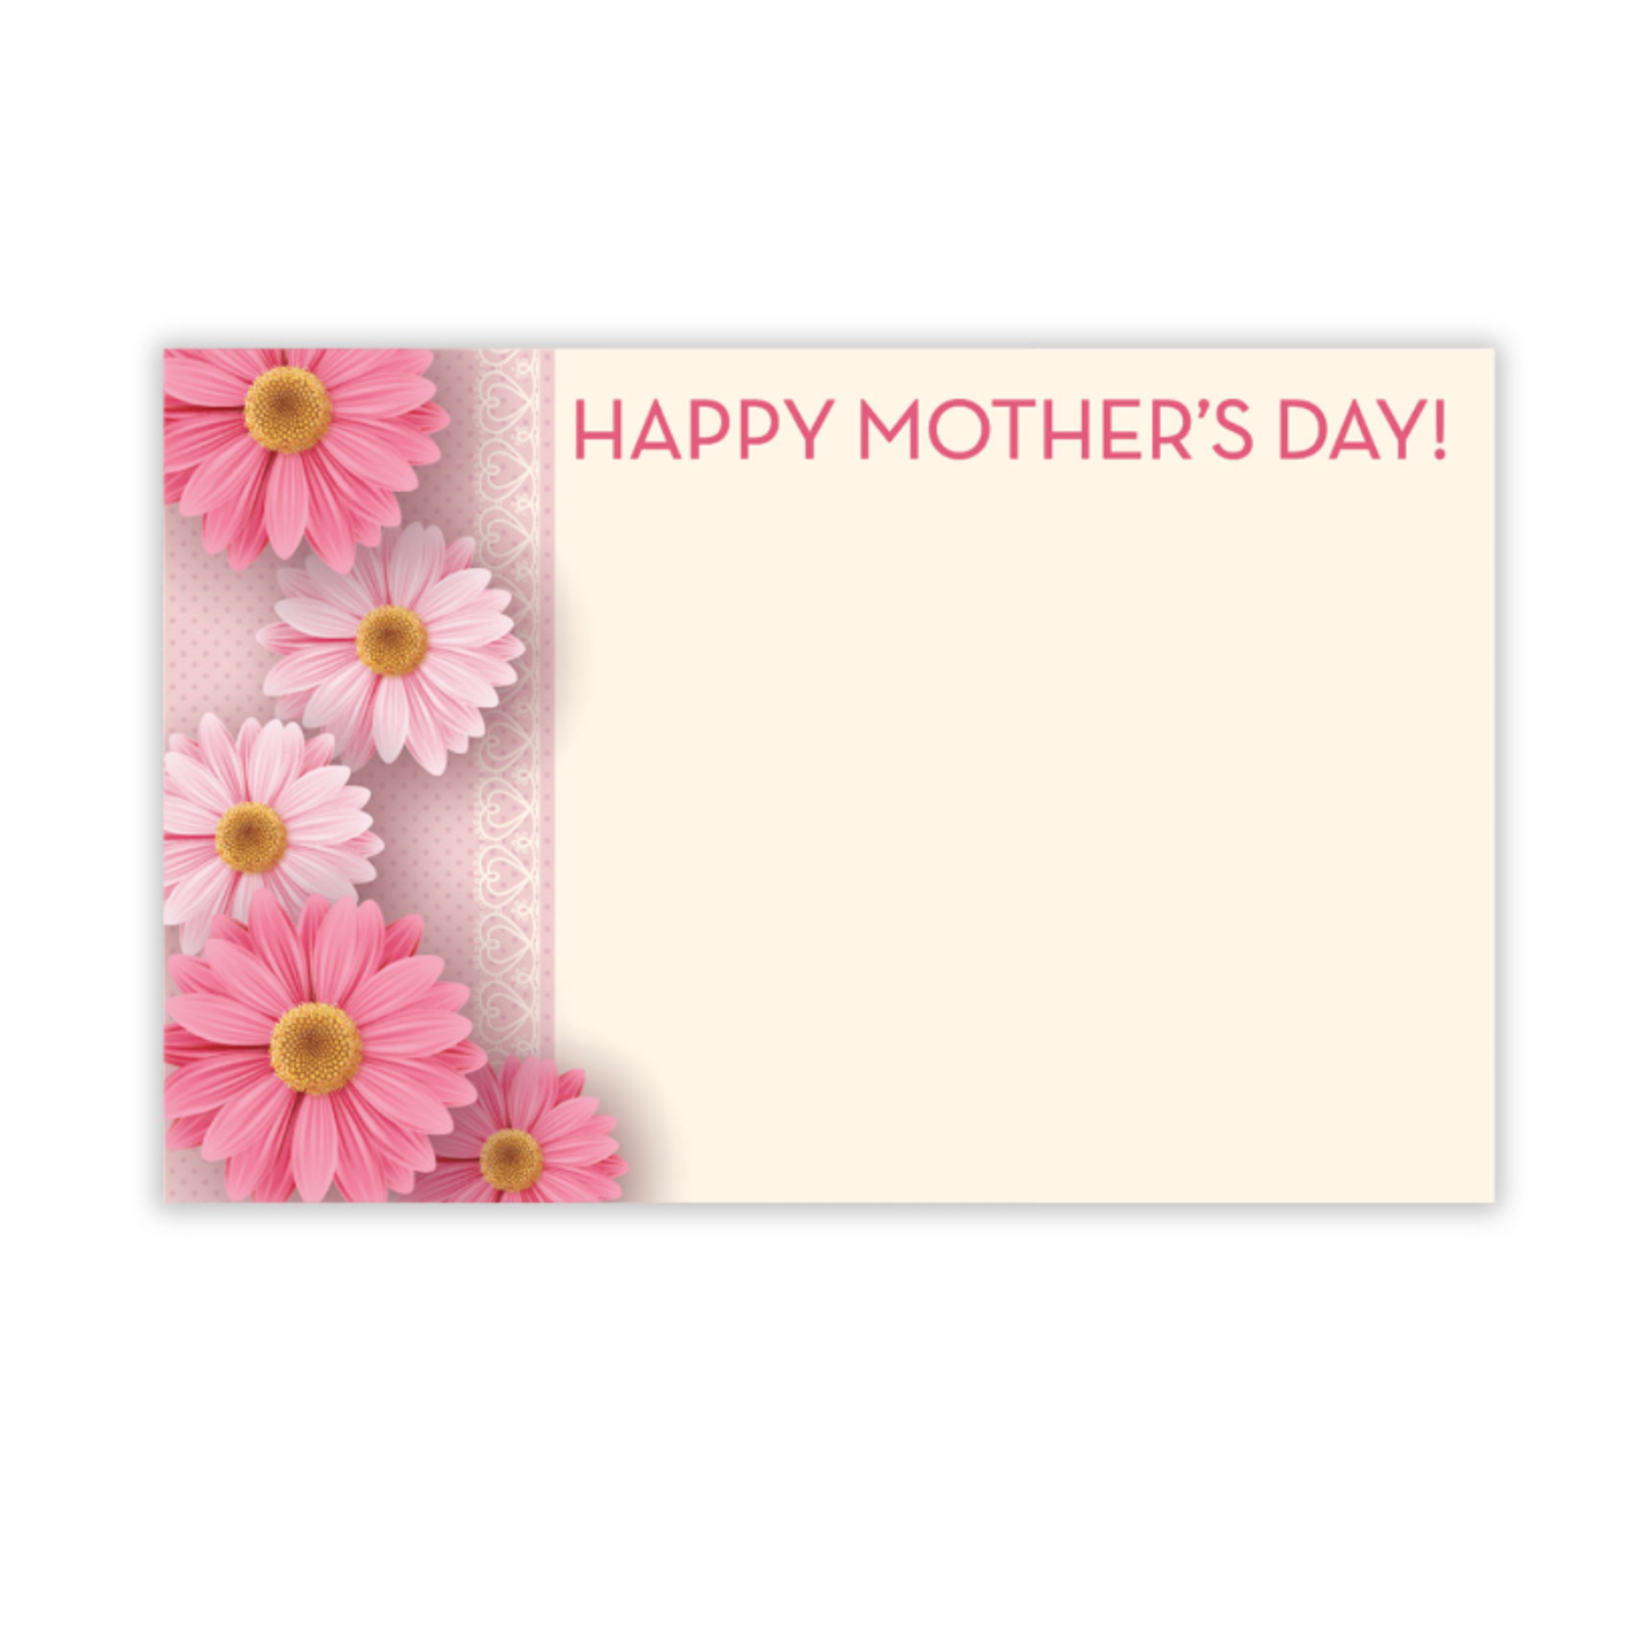 HAPPY MOTHER'S DAY CAPRI CARD, PINK GERBERS